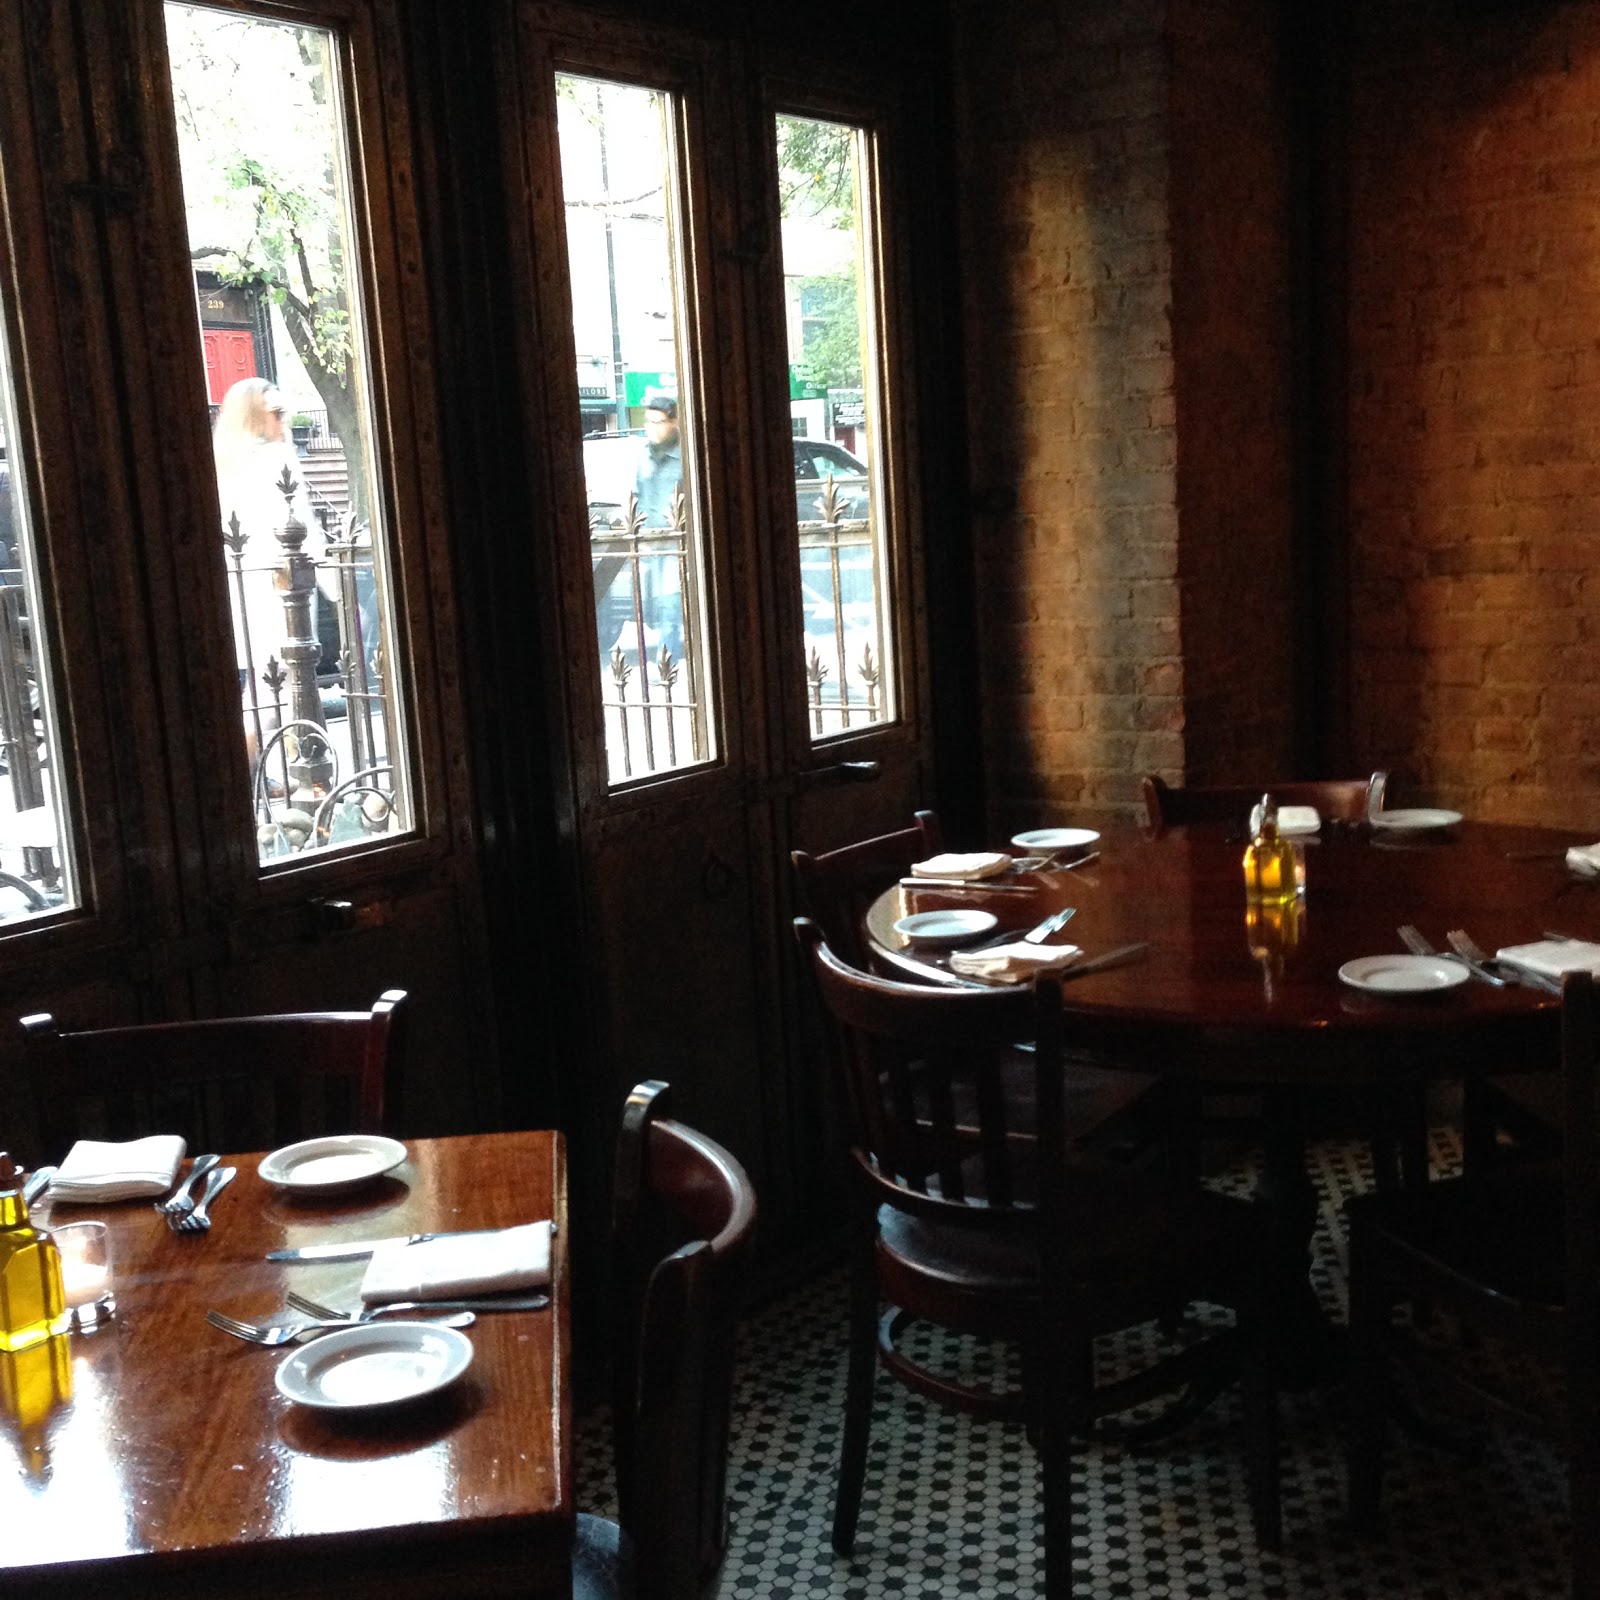 Photo of Crispo in New York City, New York, United States - 6 Picture of Restaurant, Food, Point of interest, Establishment, Bar